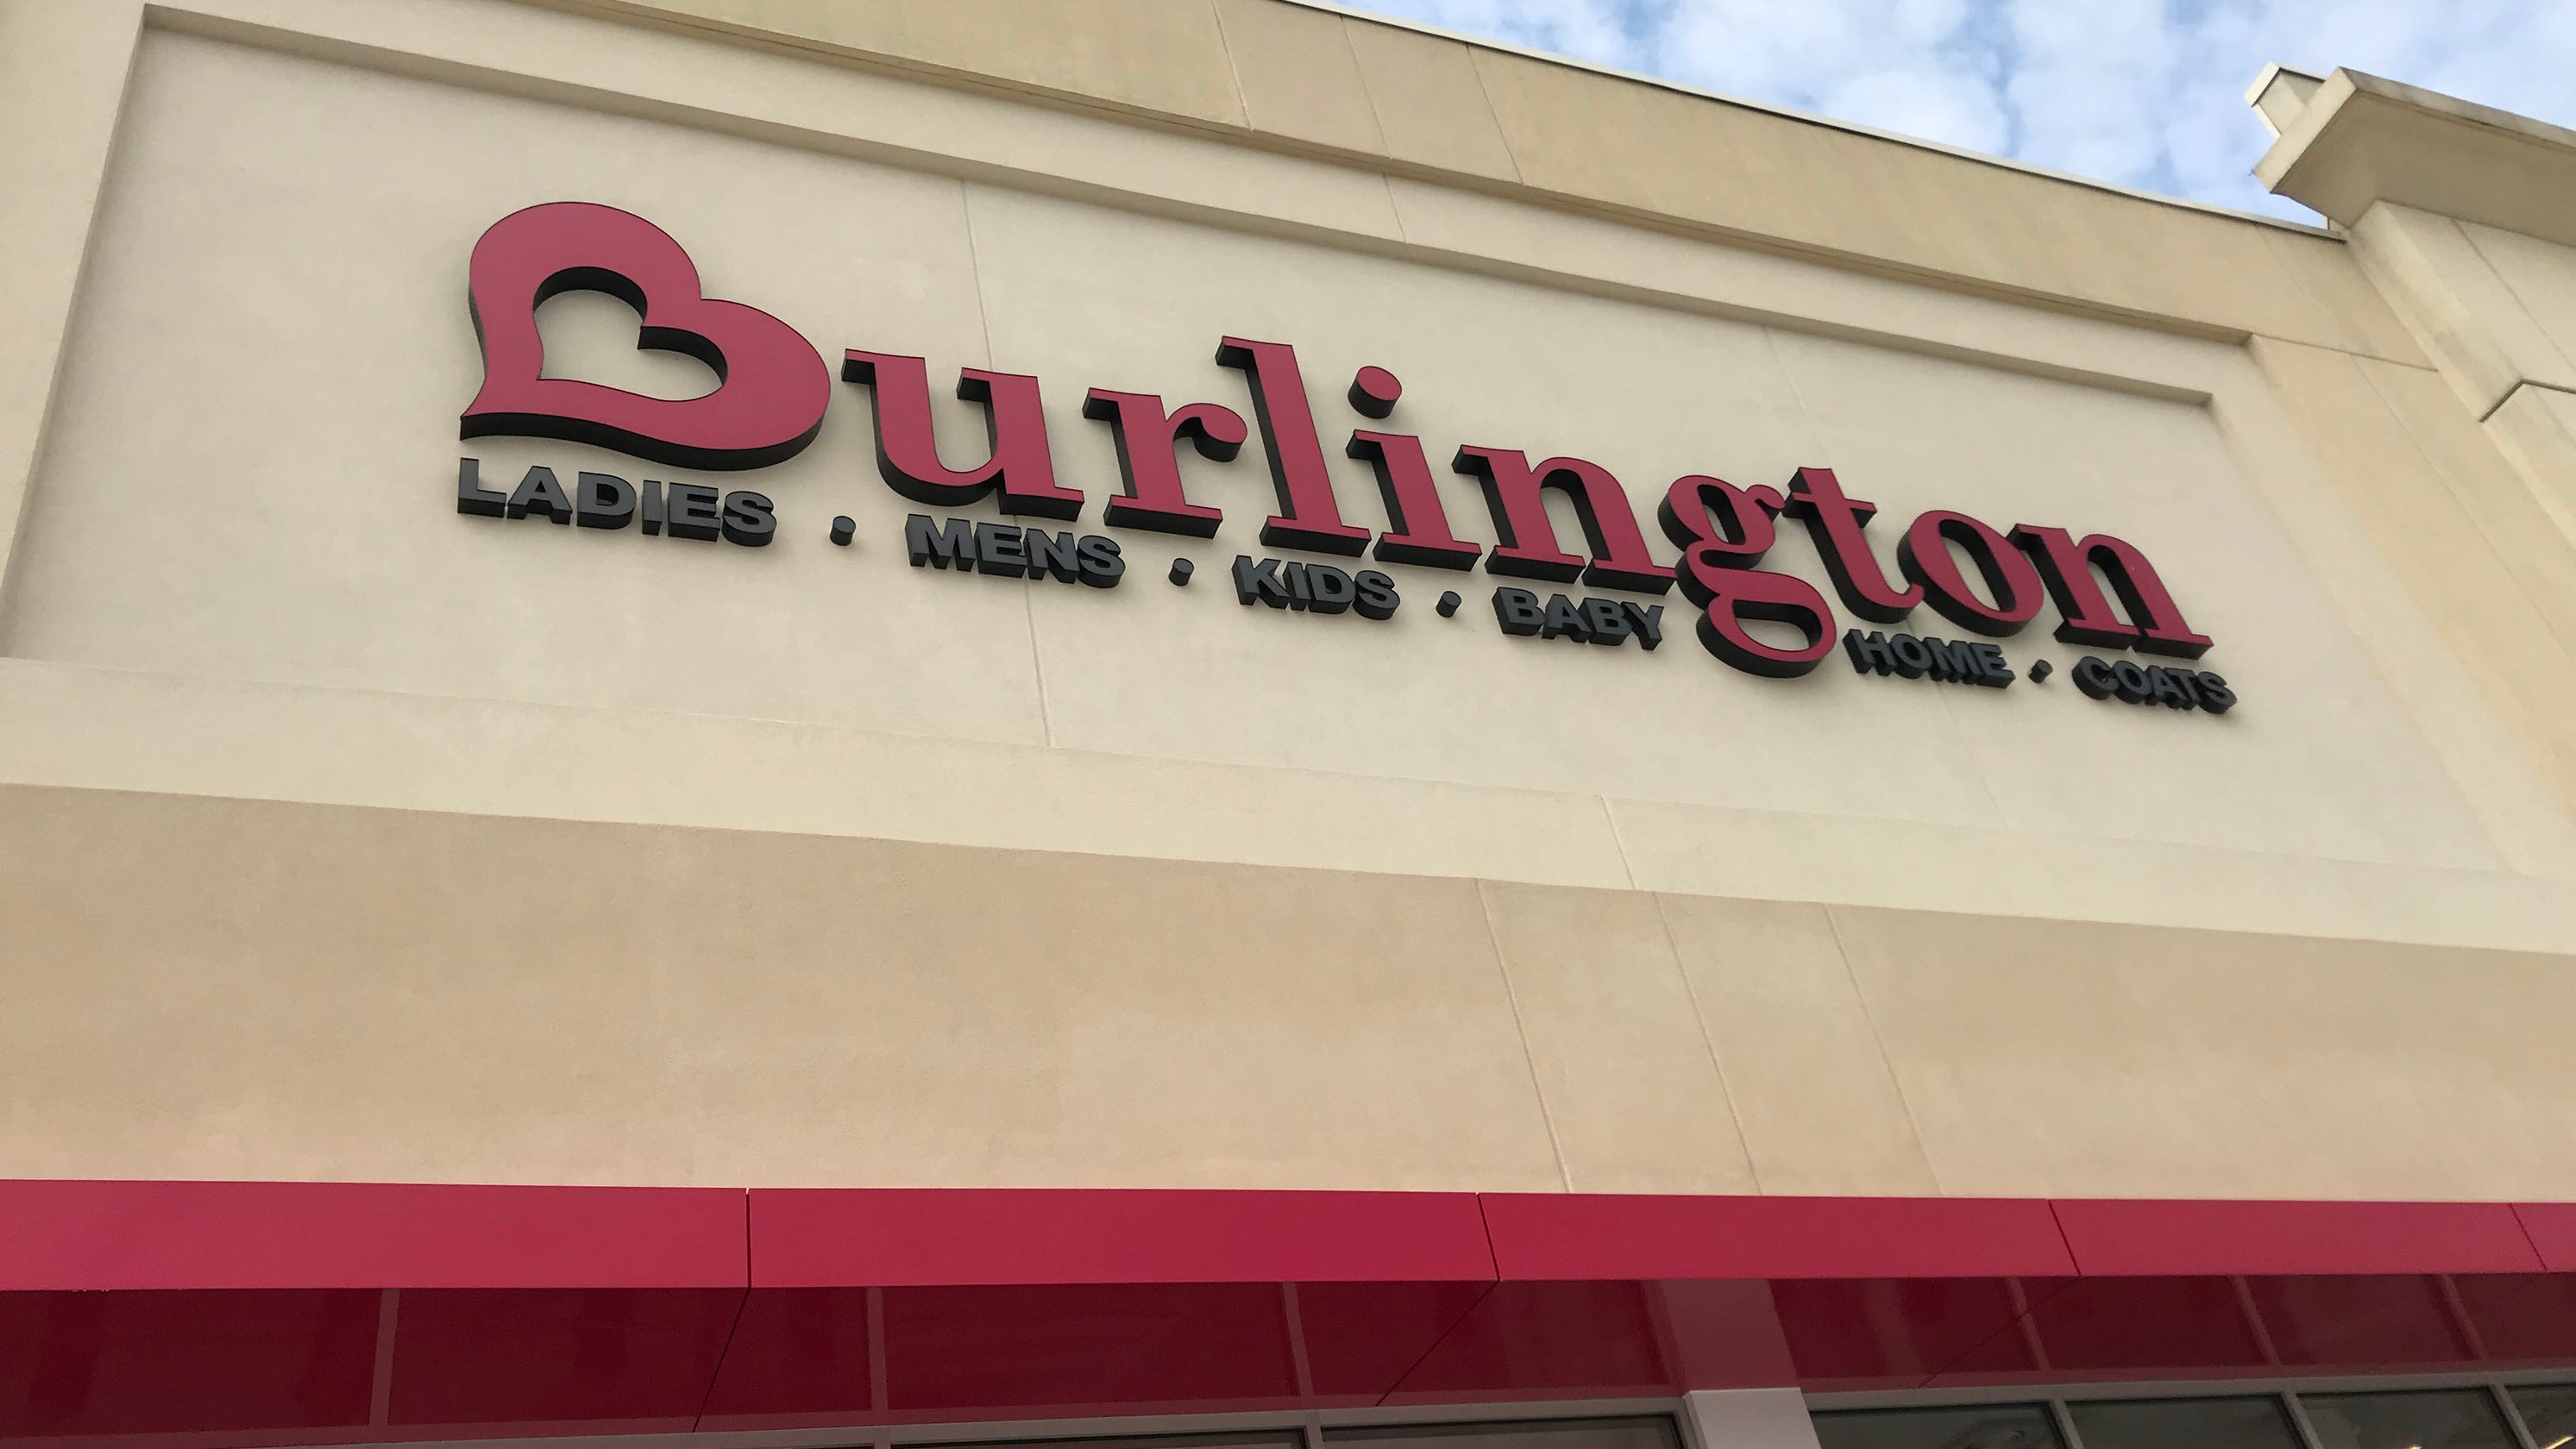 Burlington Opens Its Second Paramus Nj Location